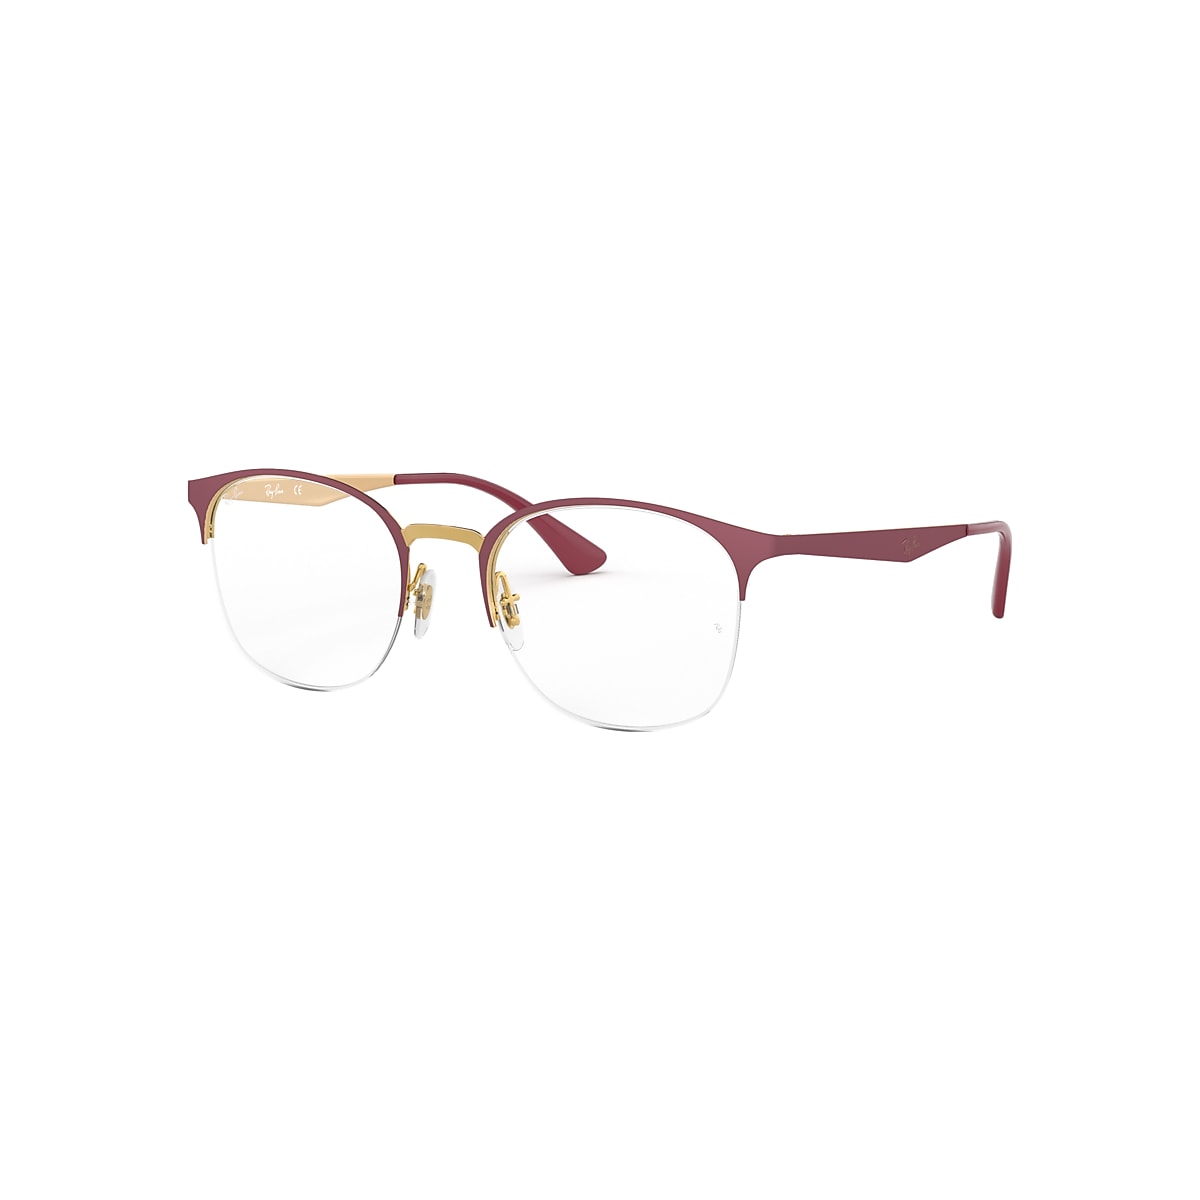 RB6422 OPTICS Eyeglasses with Bordeaux On Rose Gold Frame 